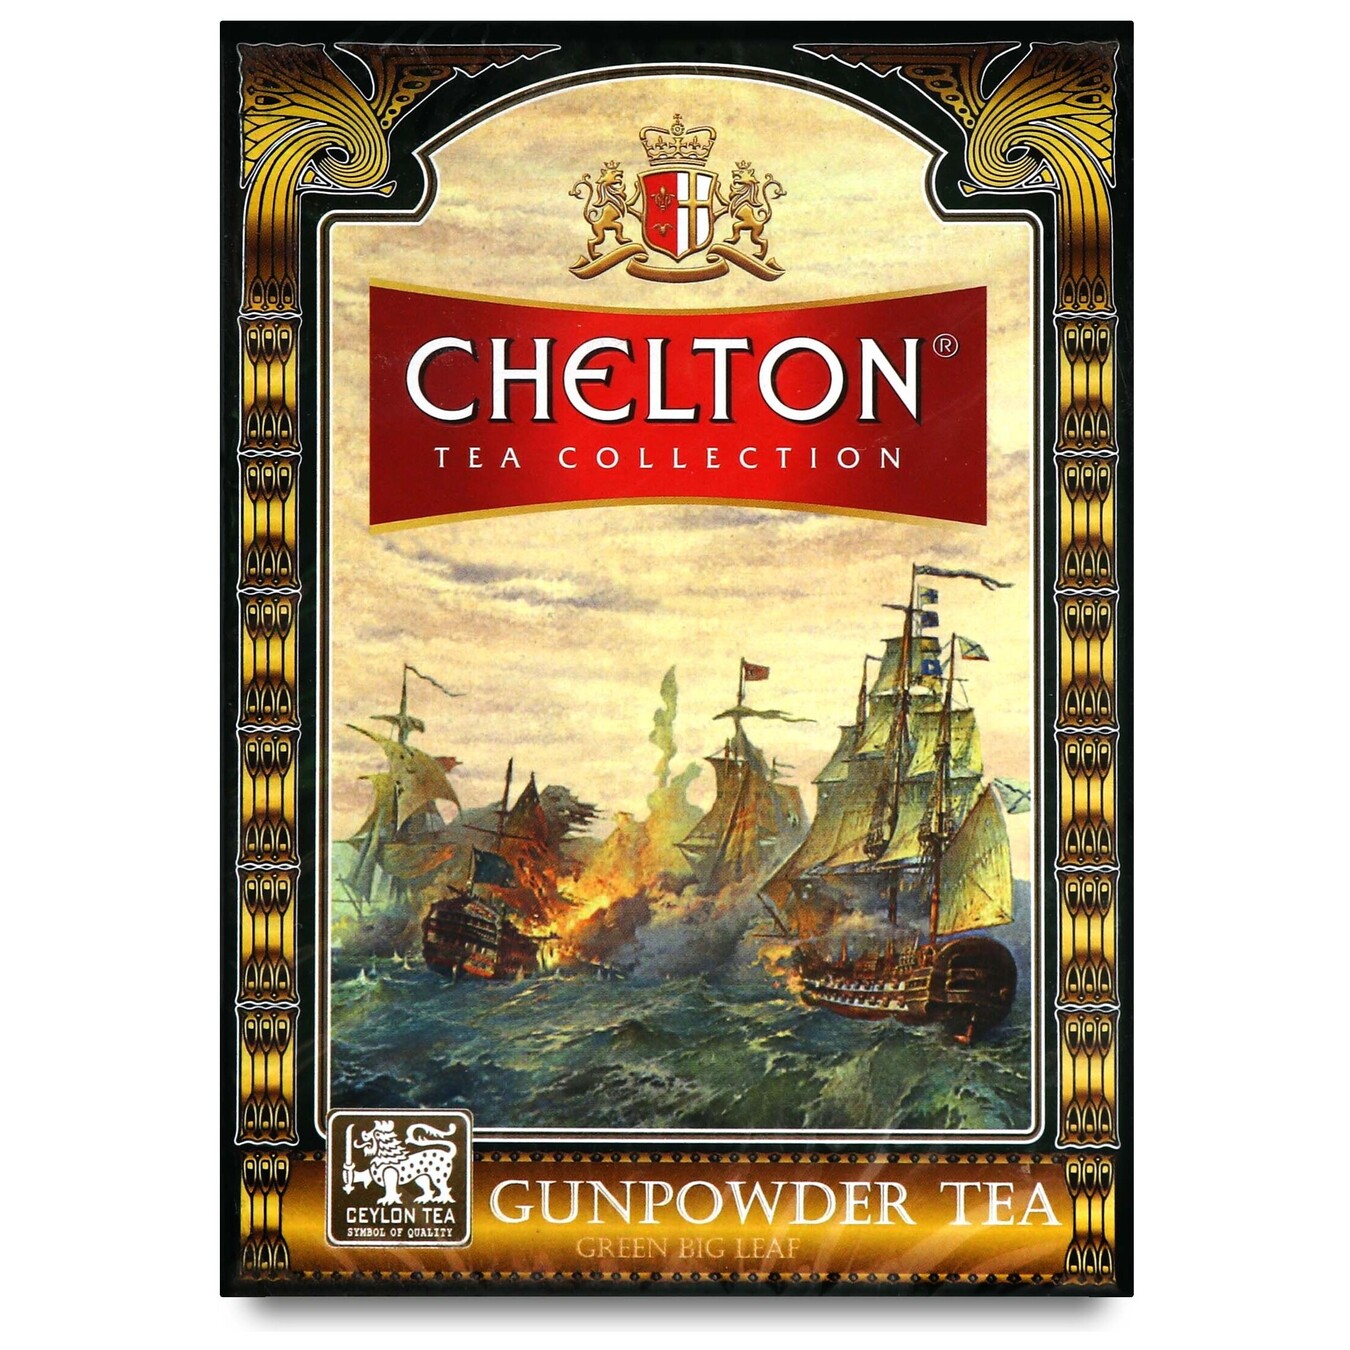 Chelton Original Green Tea 100g